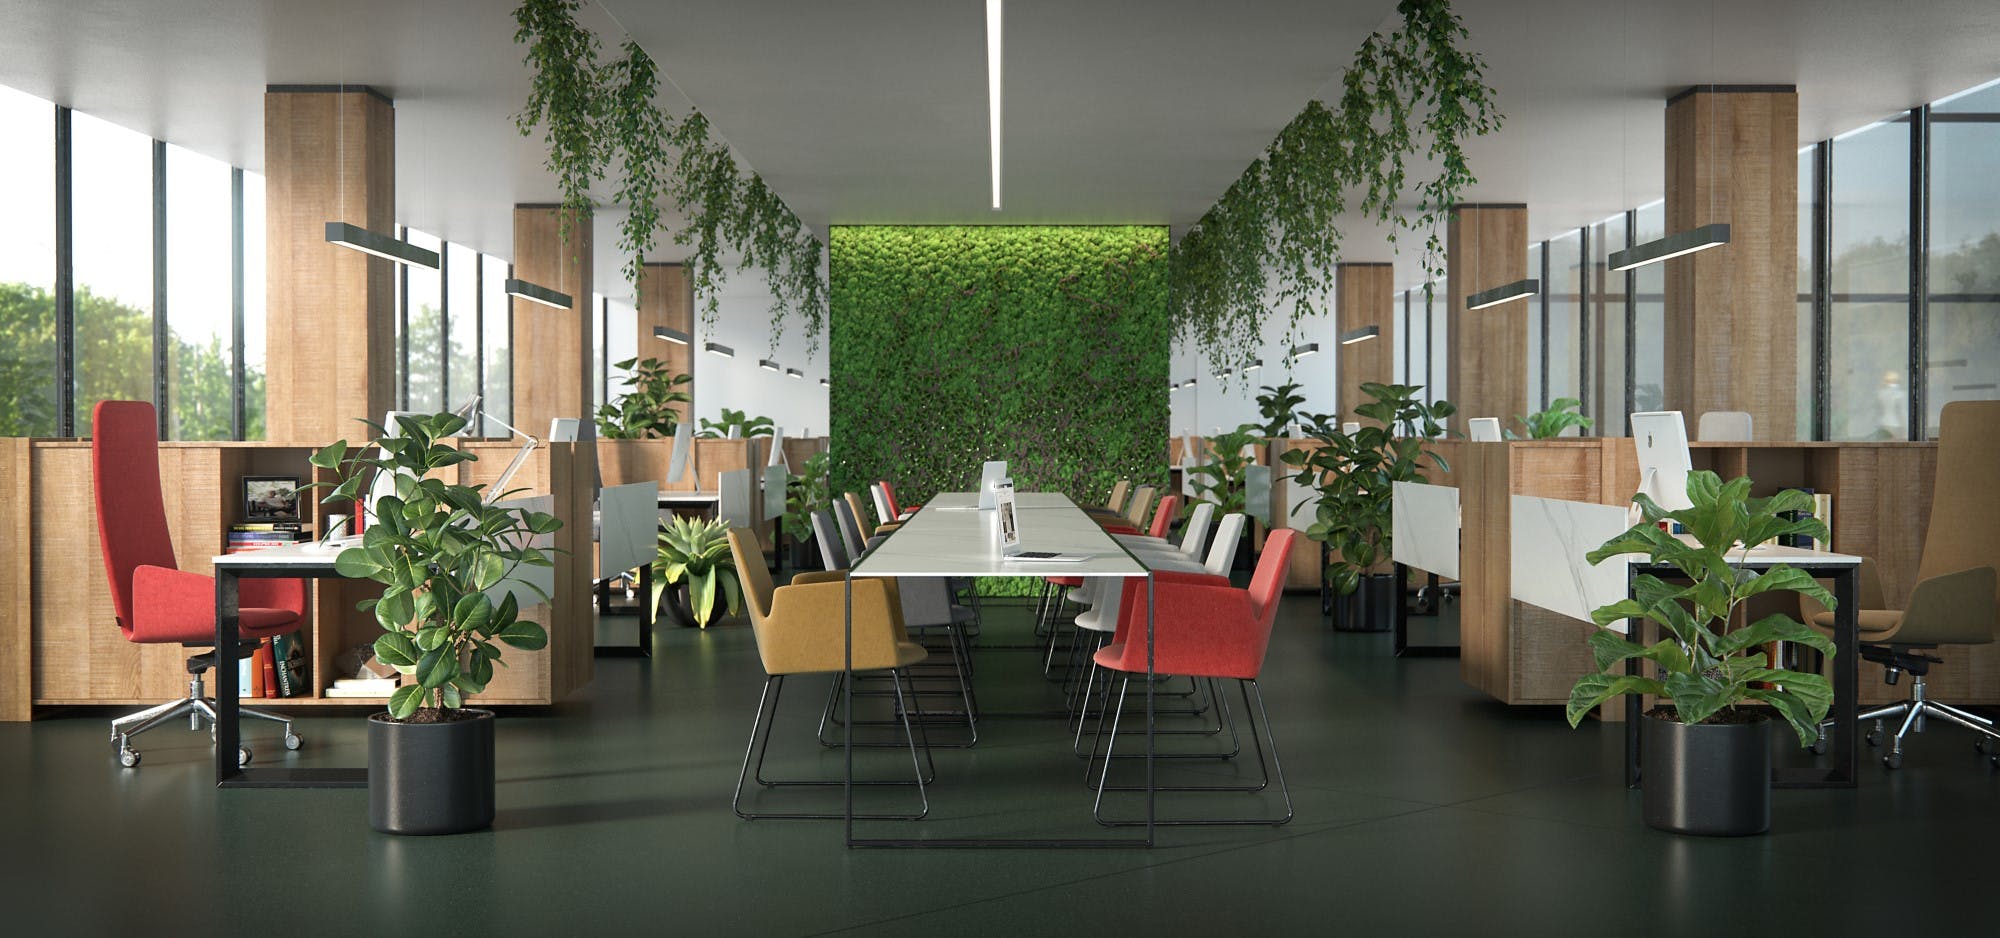 Image of Dekton Office Feroe baja 1 in Dekton® launches shades of dark blue and green, affording elegance to any space - Cosentino